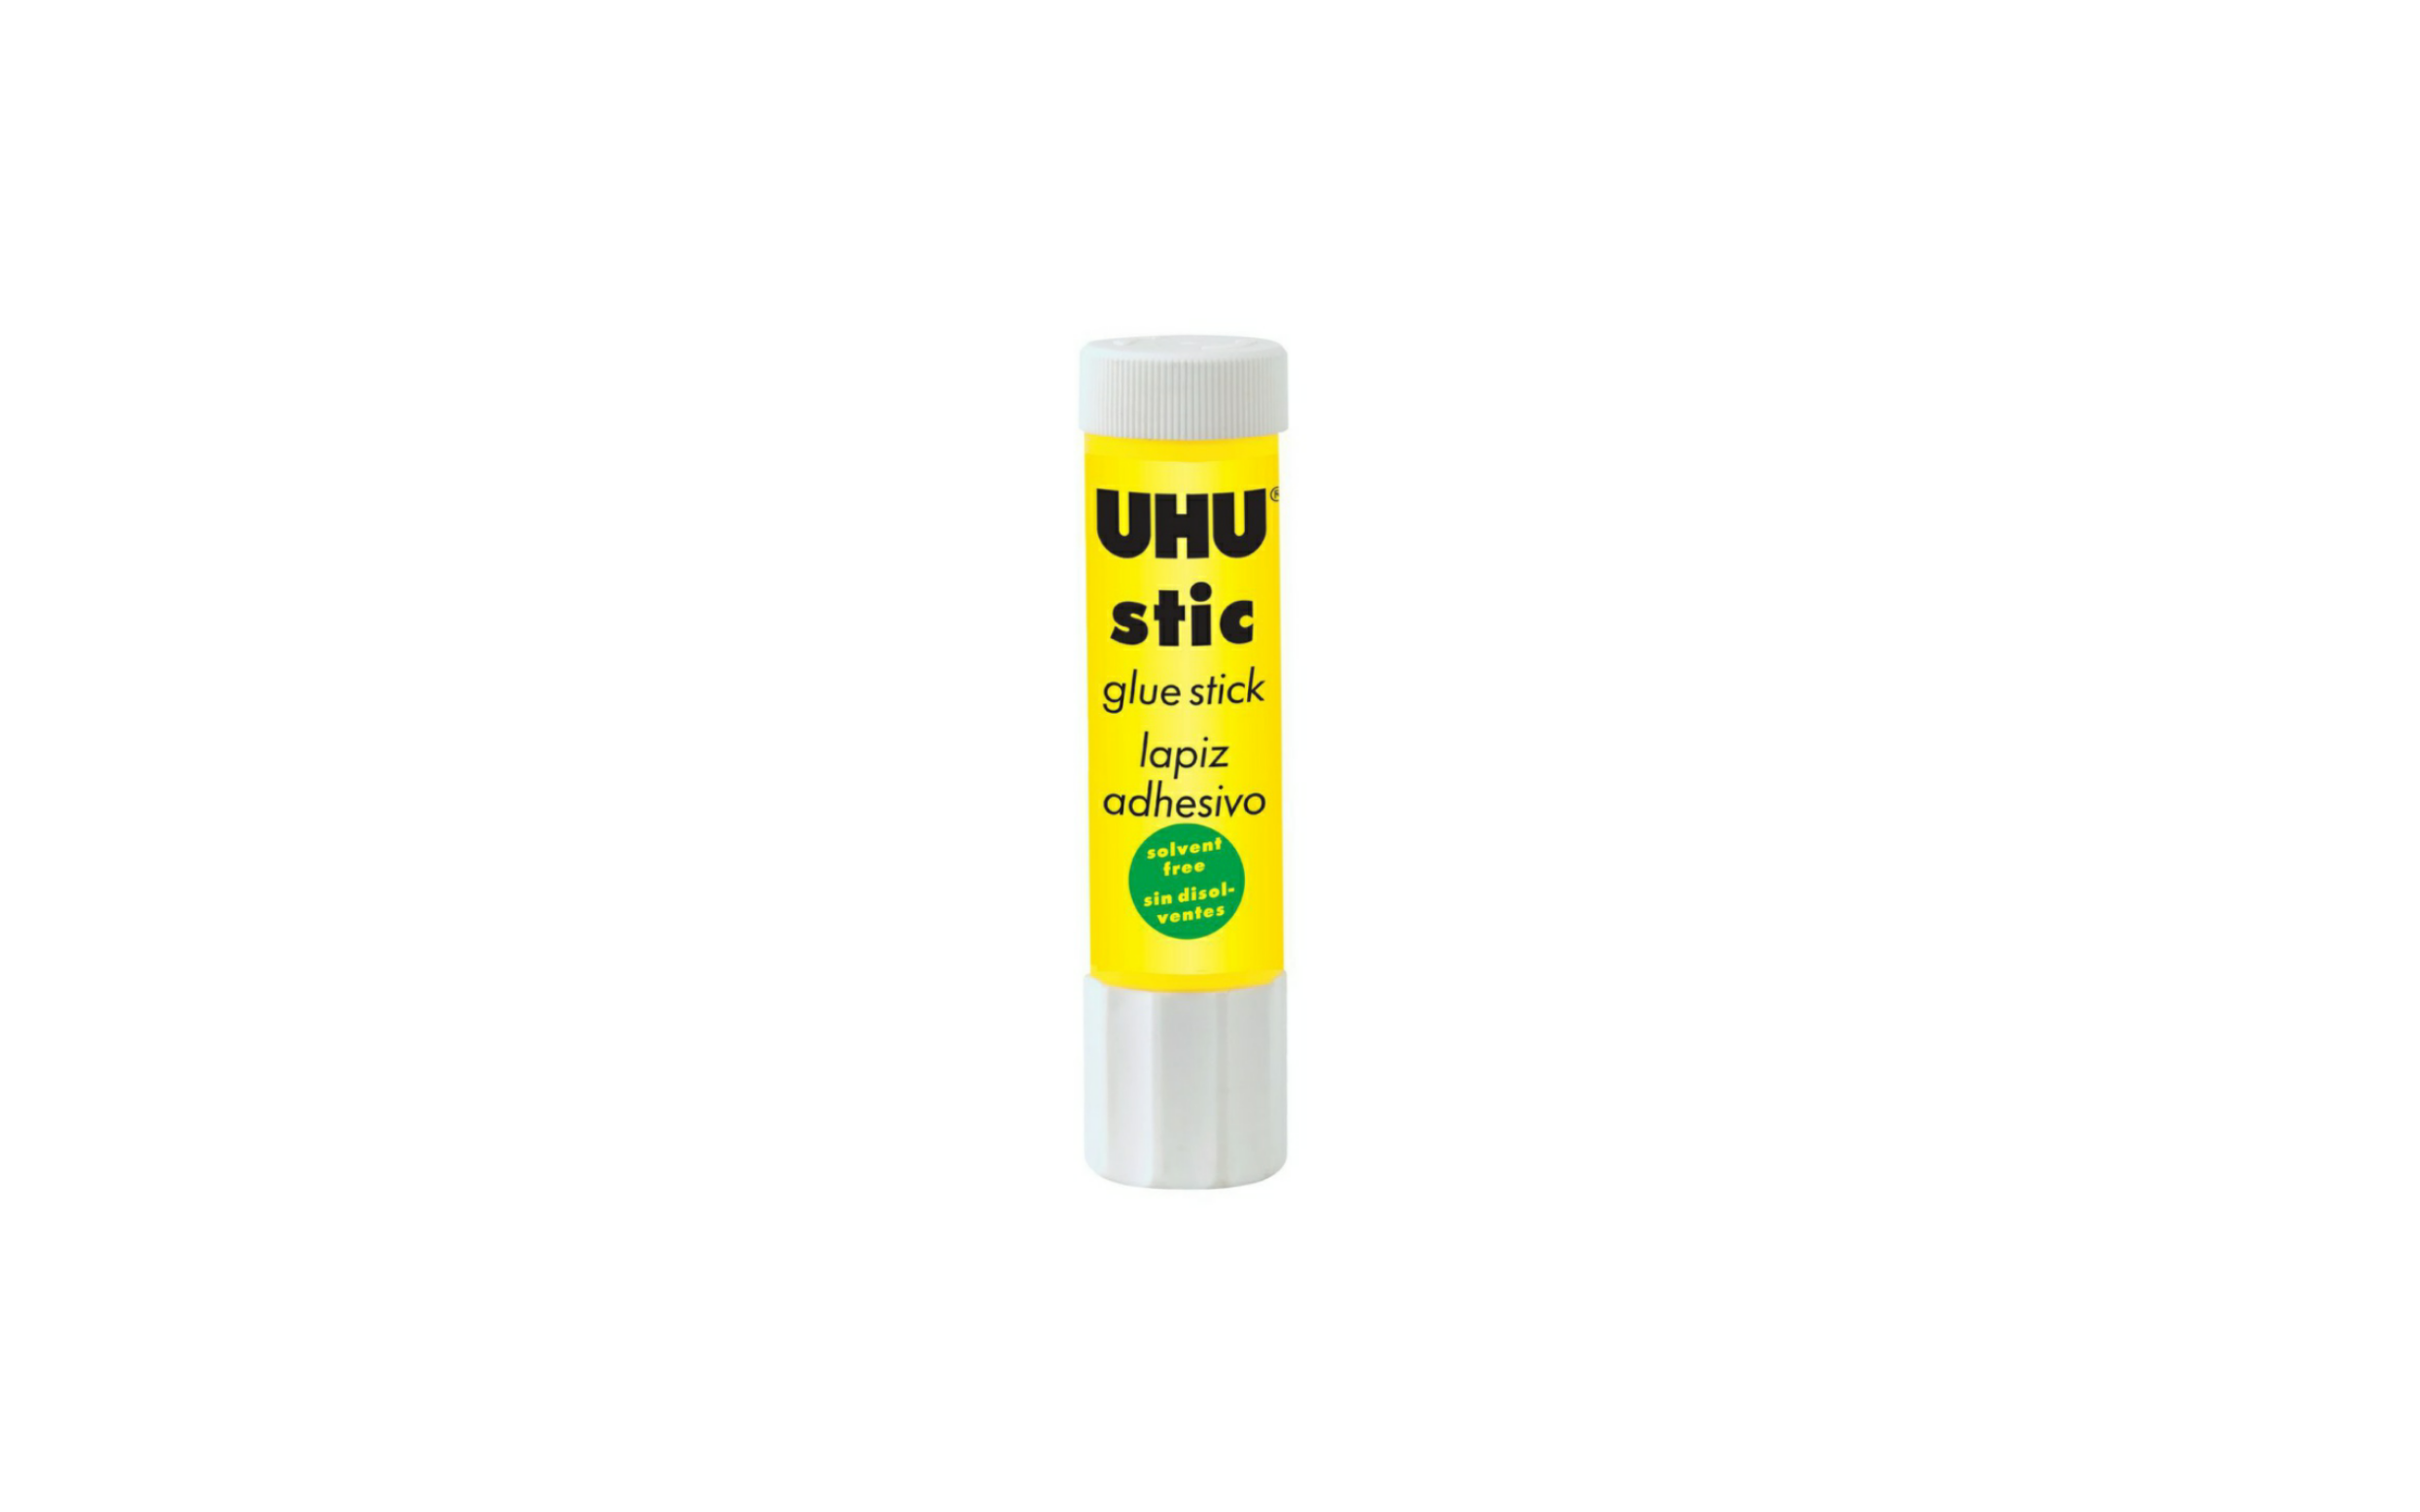 Buy UHU glue stick 0.29 oz